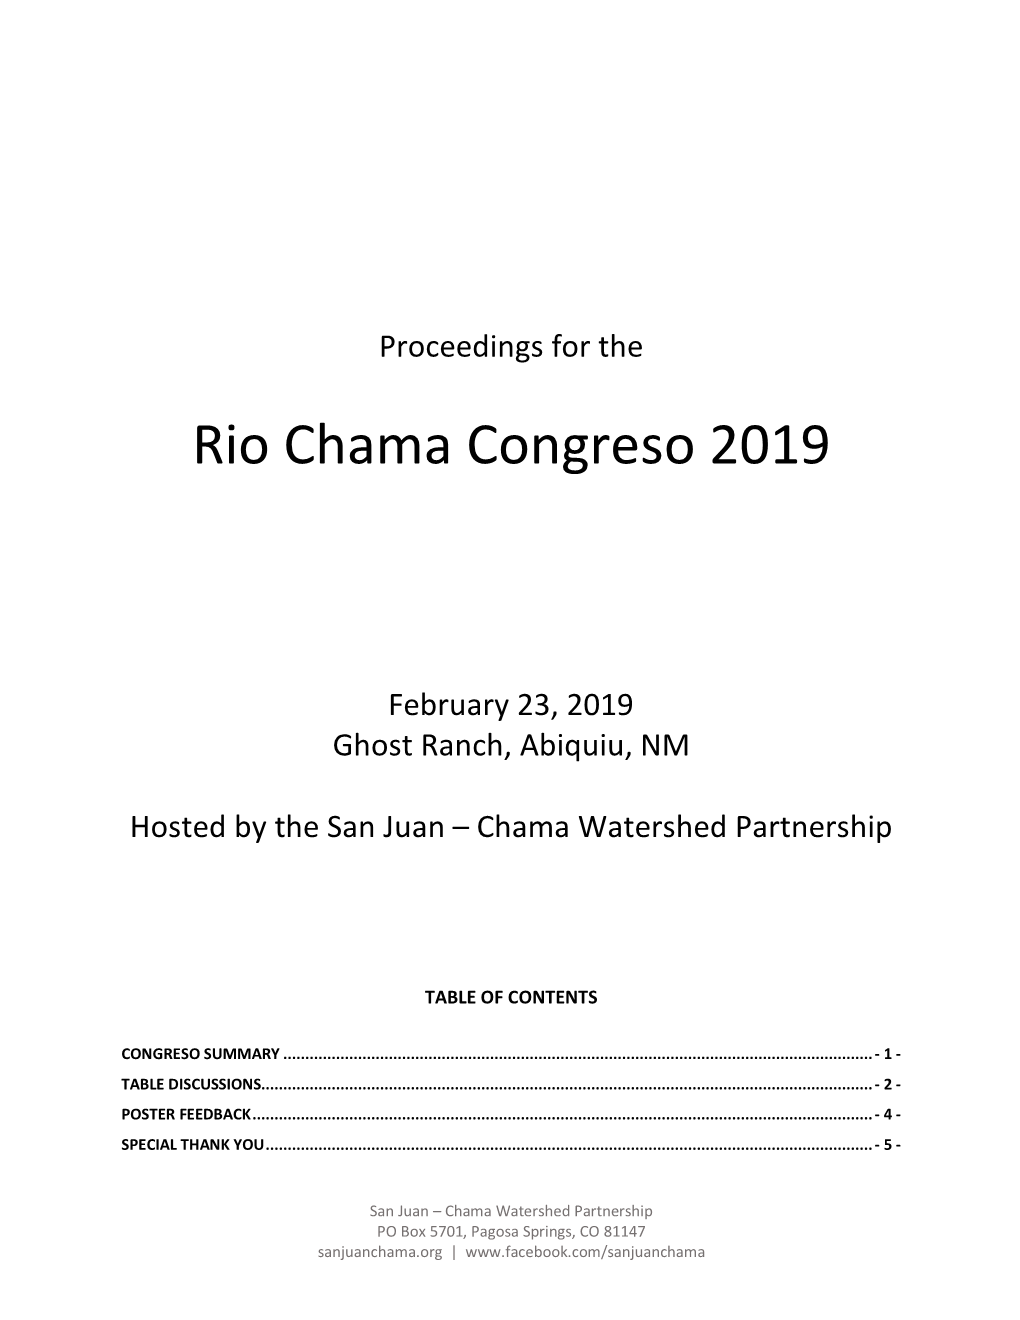 Congreso 2019 Proceedings